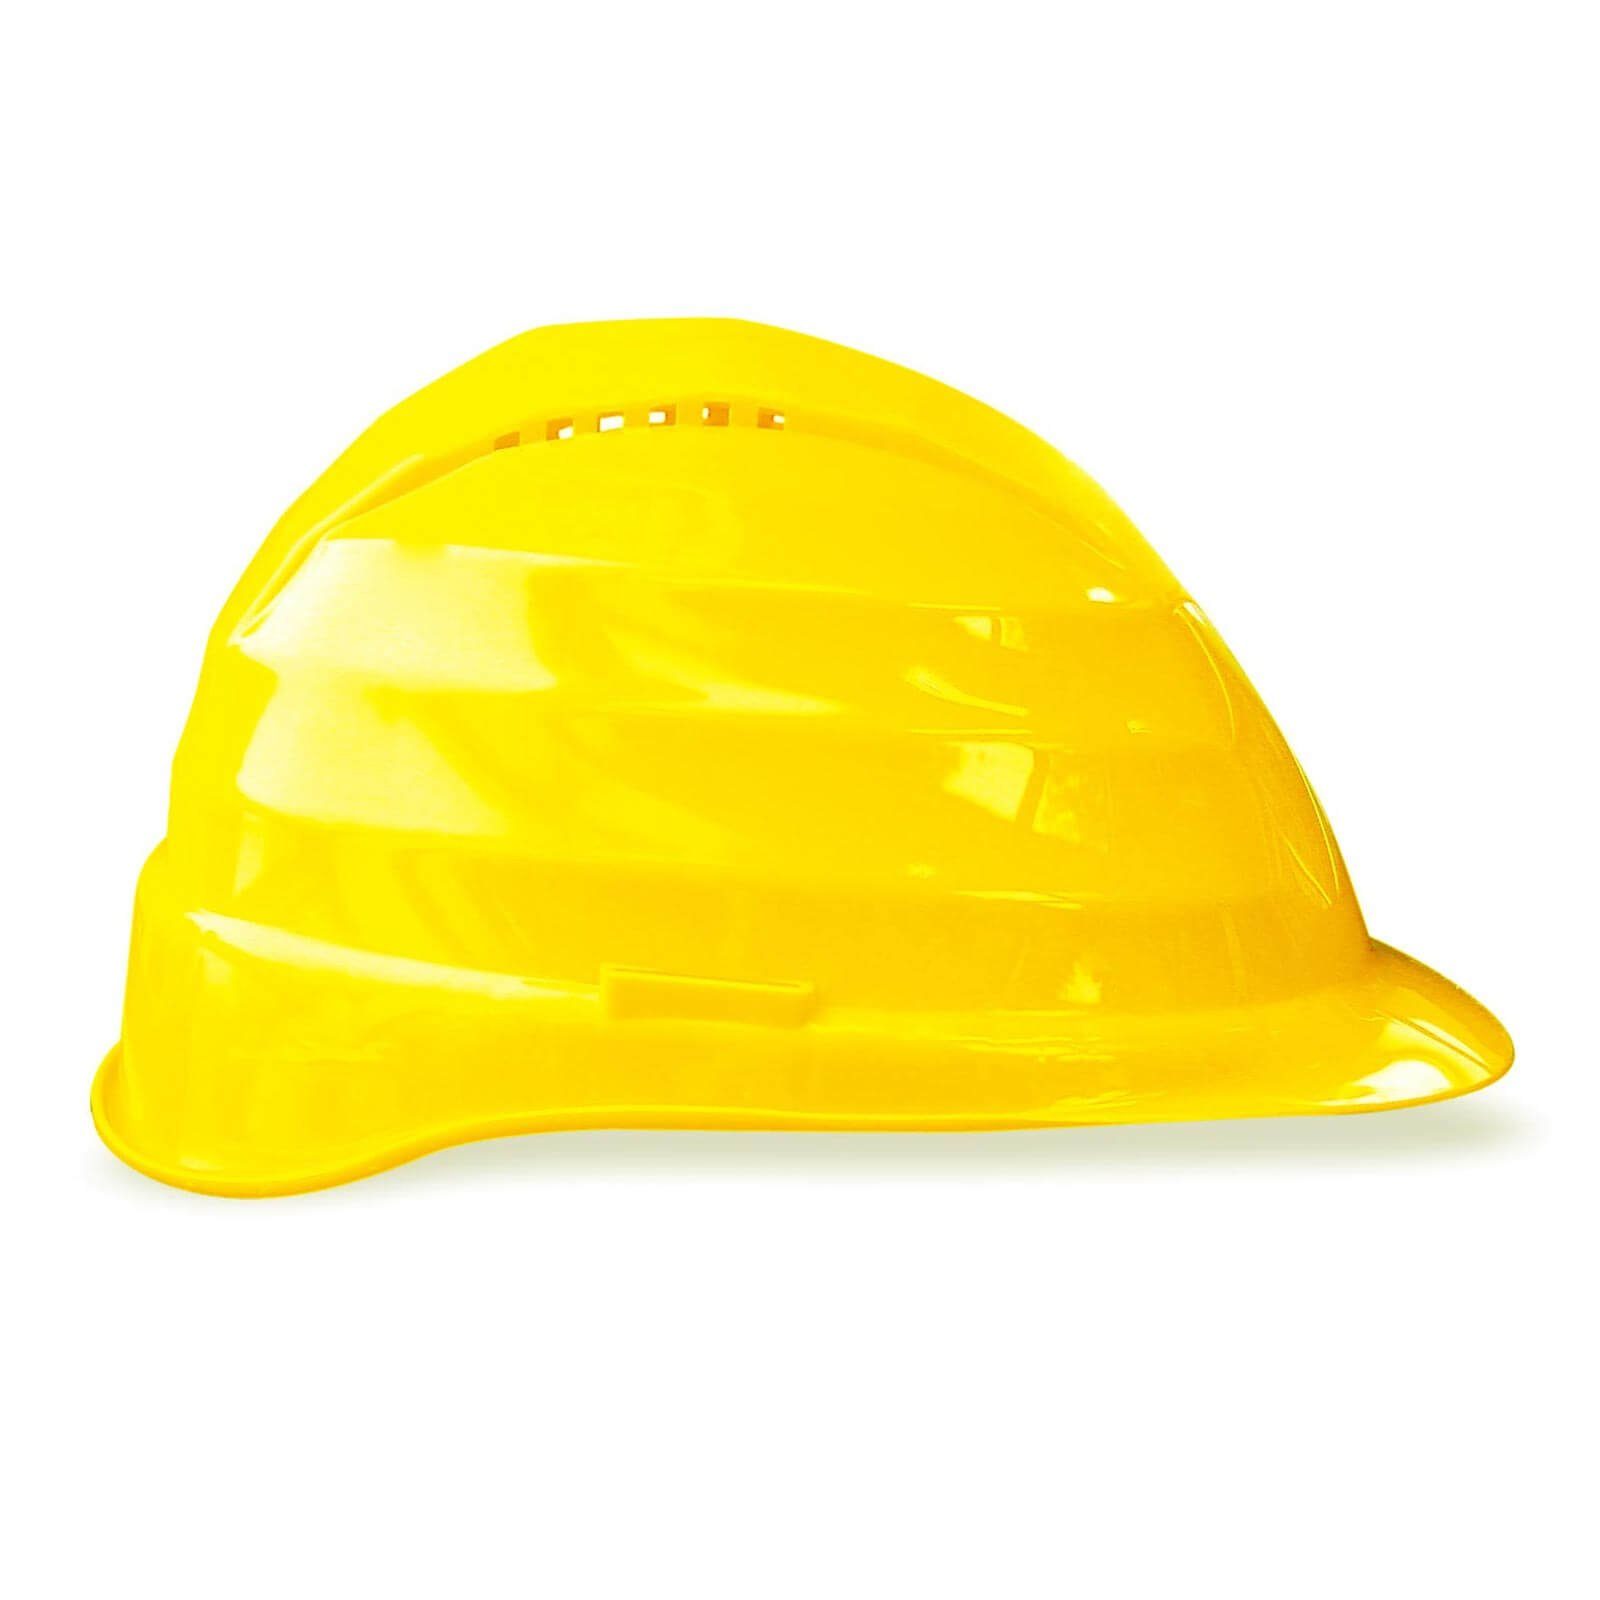 ENHA Schutzhelm ENHA ROCKMANN C6 Schutzhelm - Arbeitsschutzhelm, Sturzhelm, Helm gelb | Kopfschutz